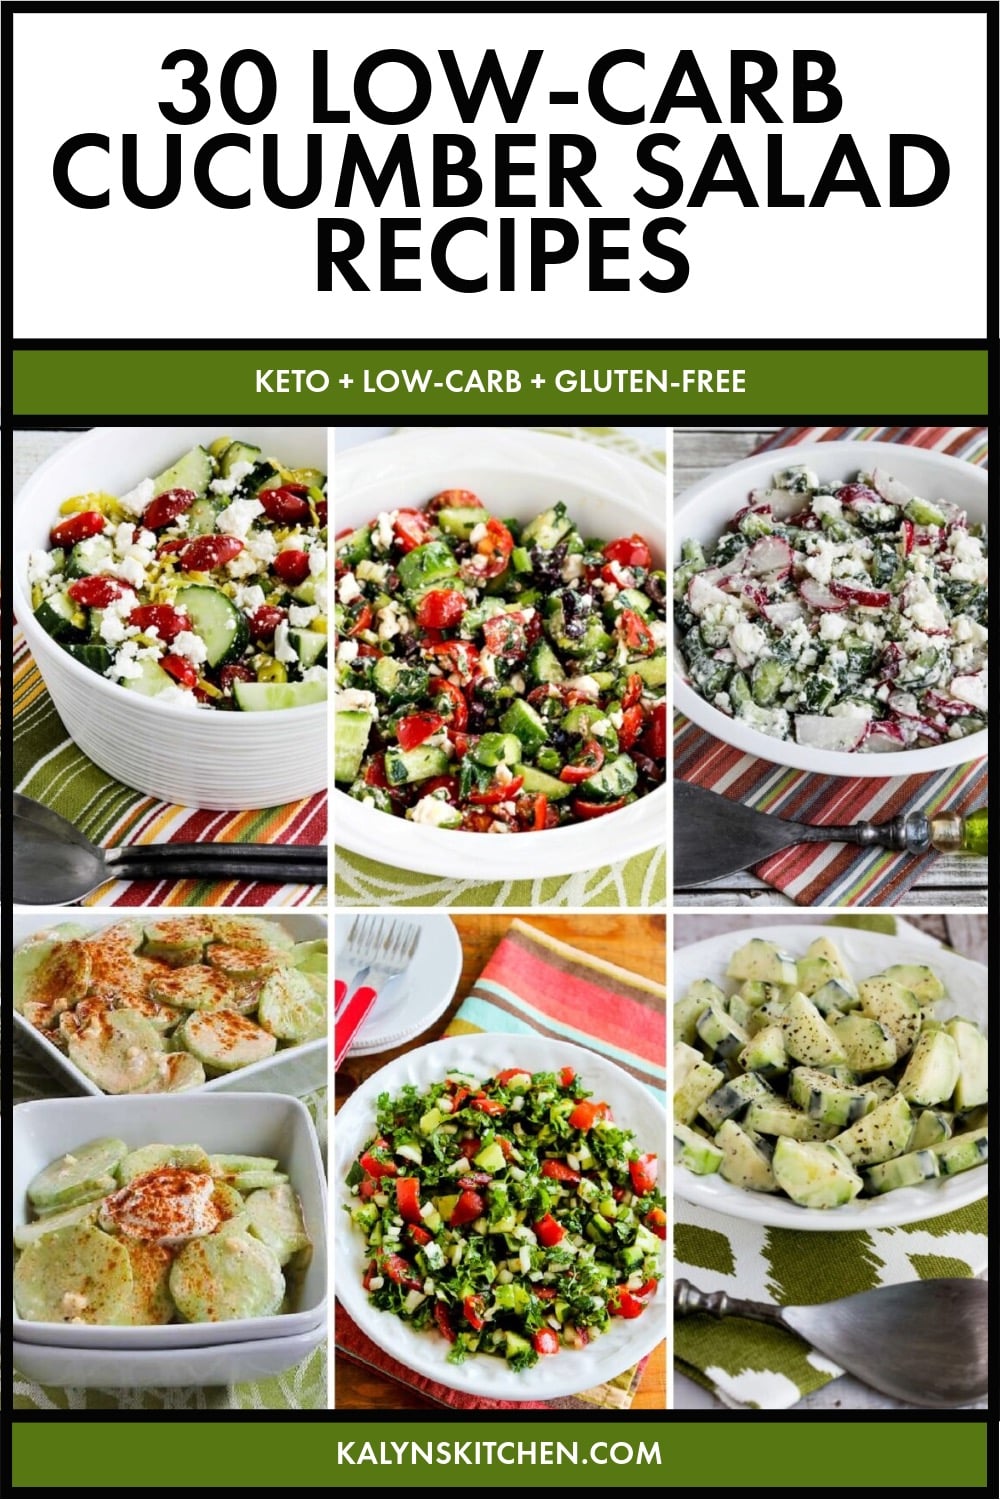 Pinterest image of 30 Low-Carb Cucumber Salad Recipes